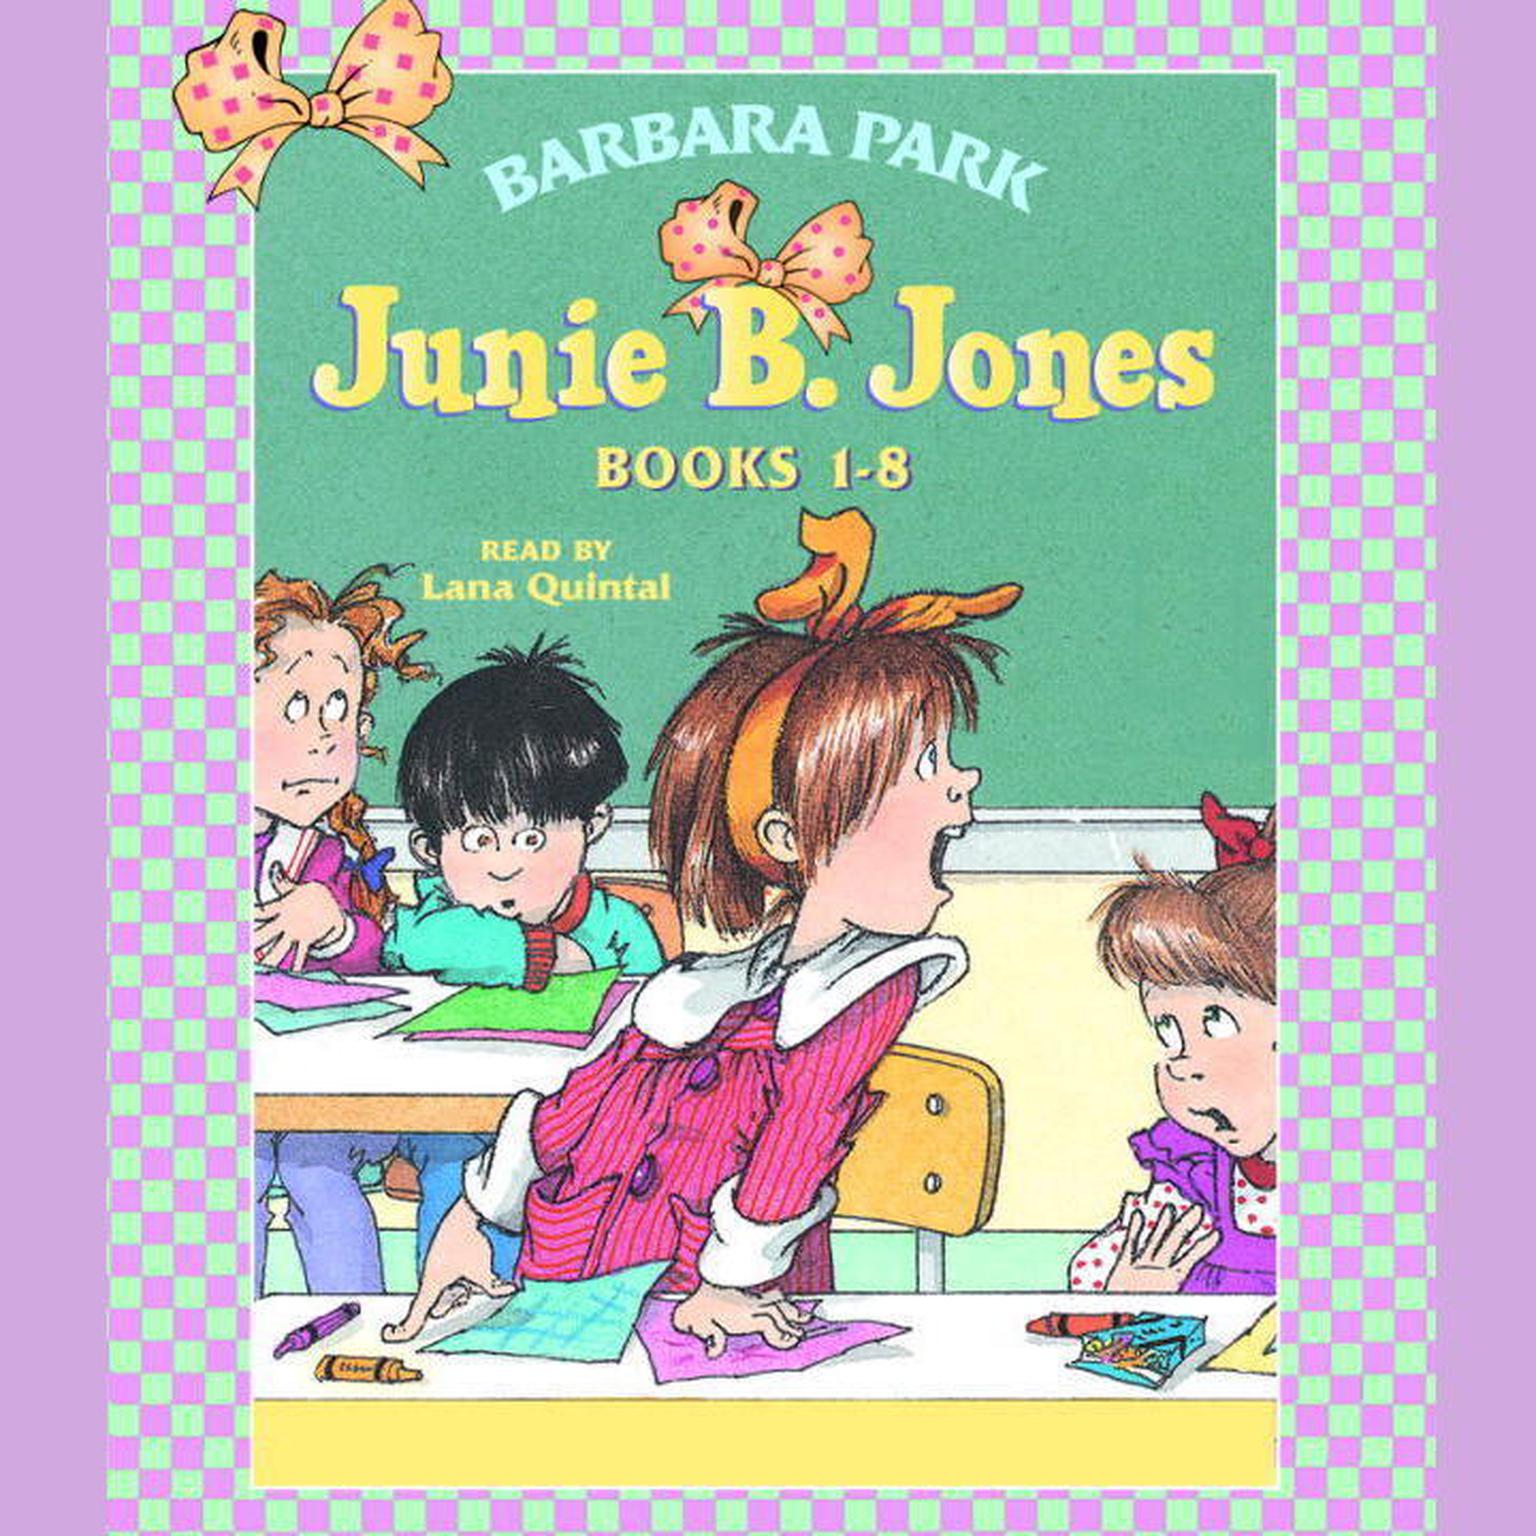 Junie B. Jones Collection: Books 1-8 Audiobook, by Barbara Park